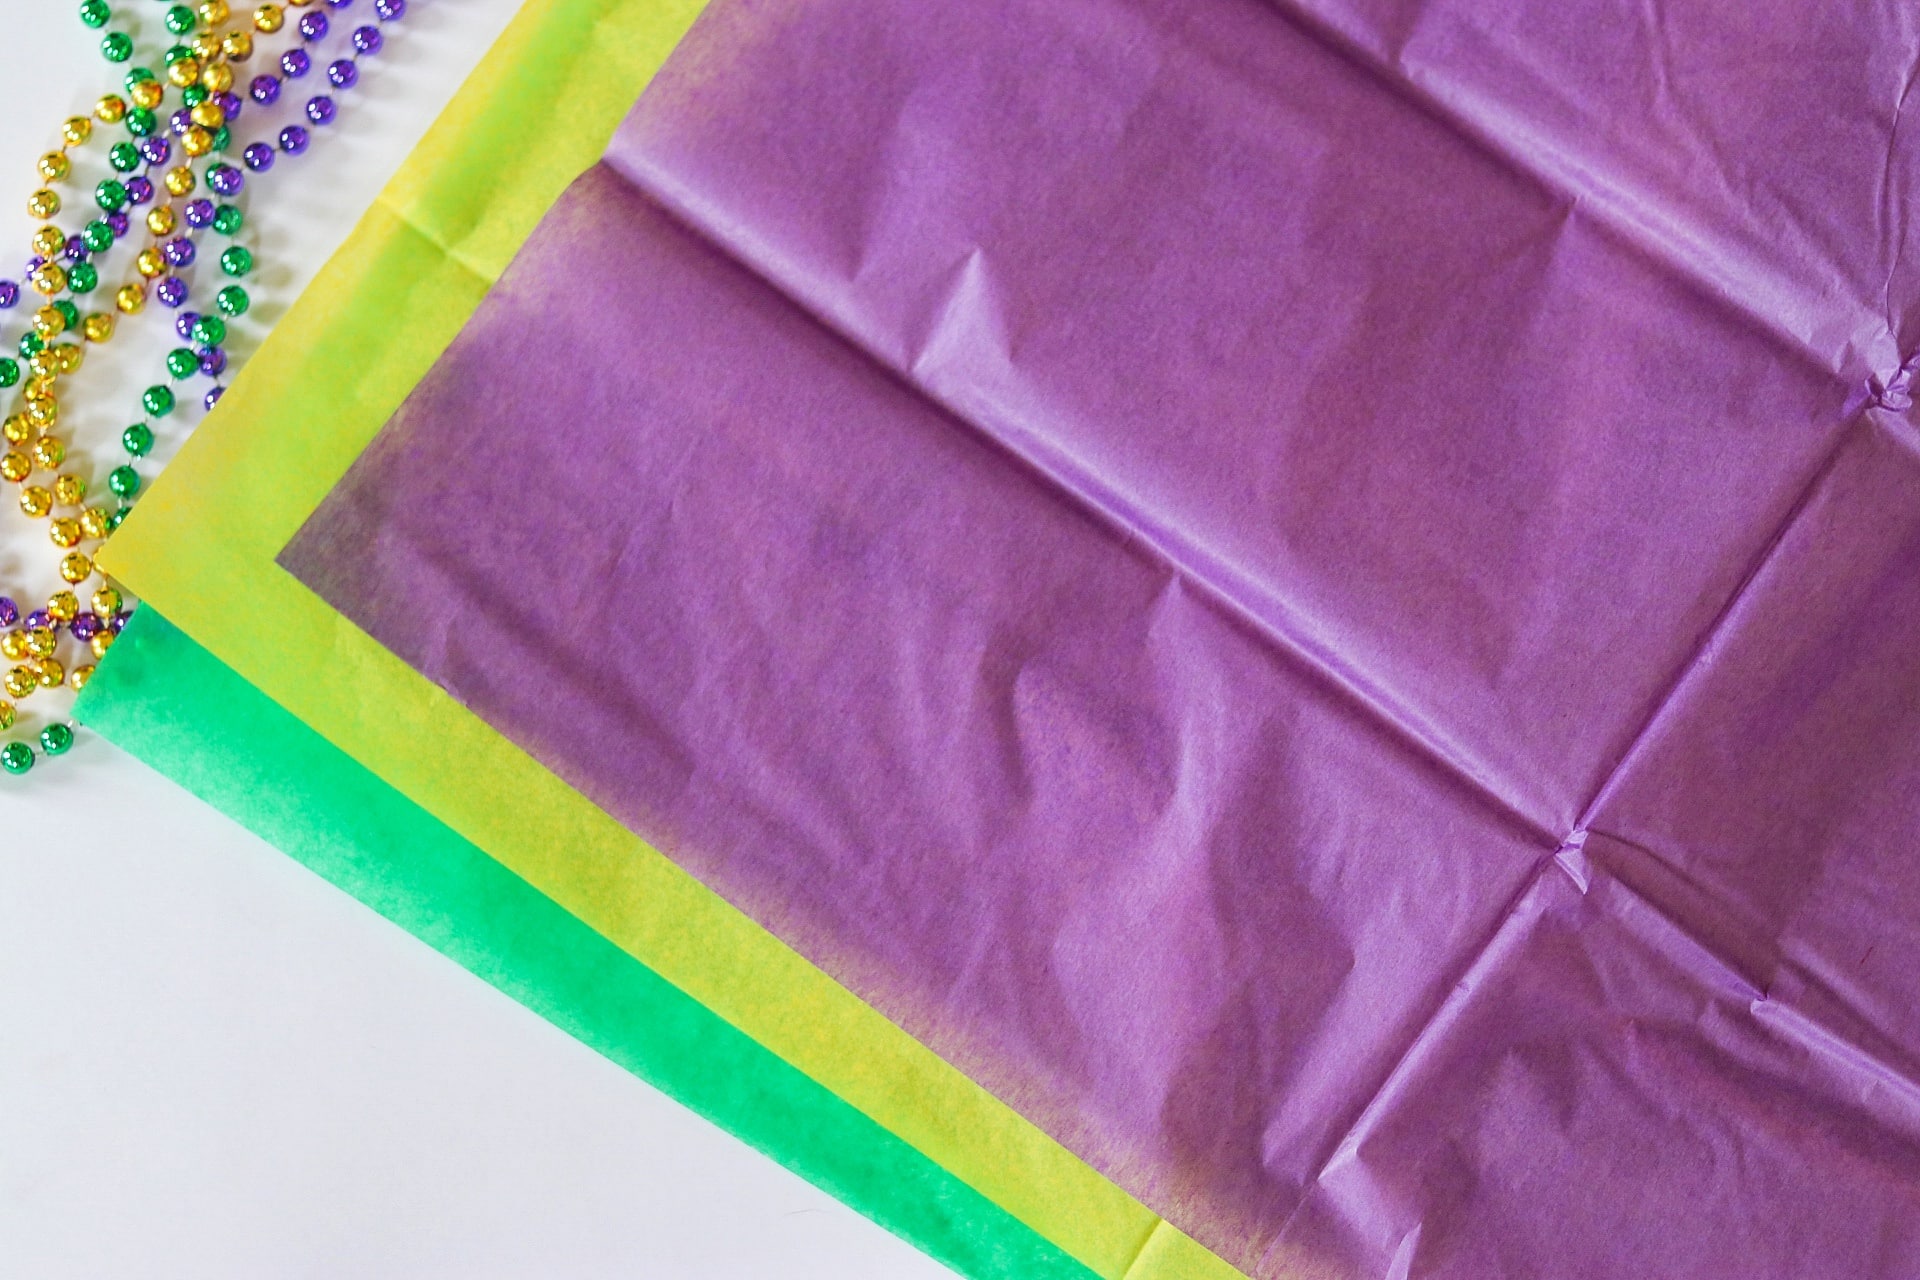 How to make tissue paper Mardi Gras garlands